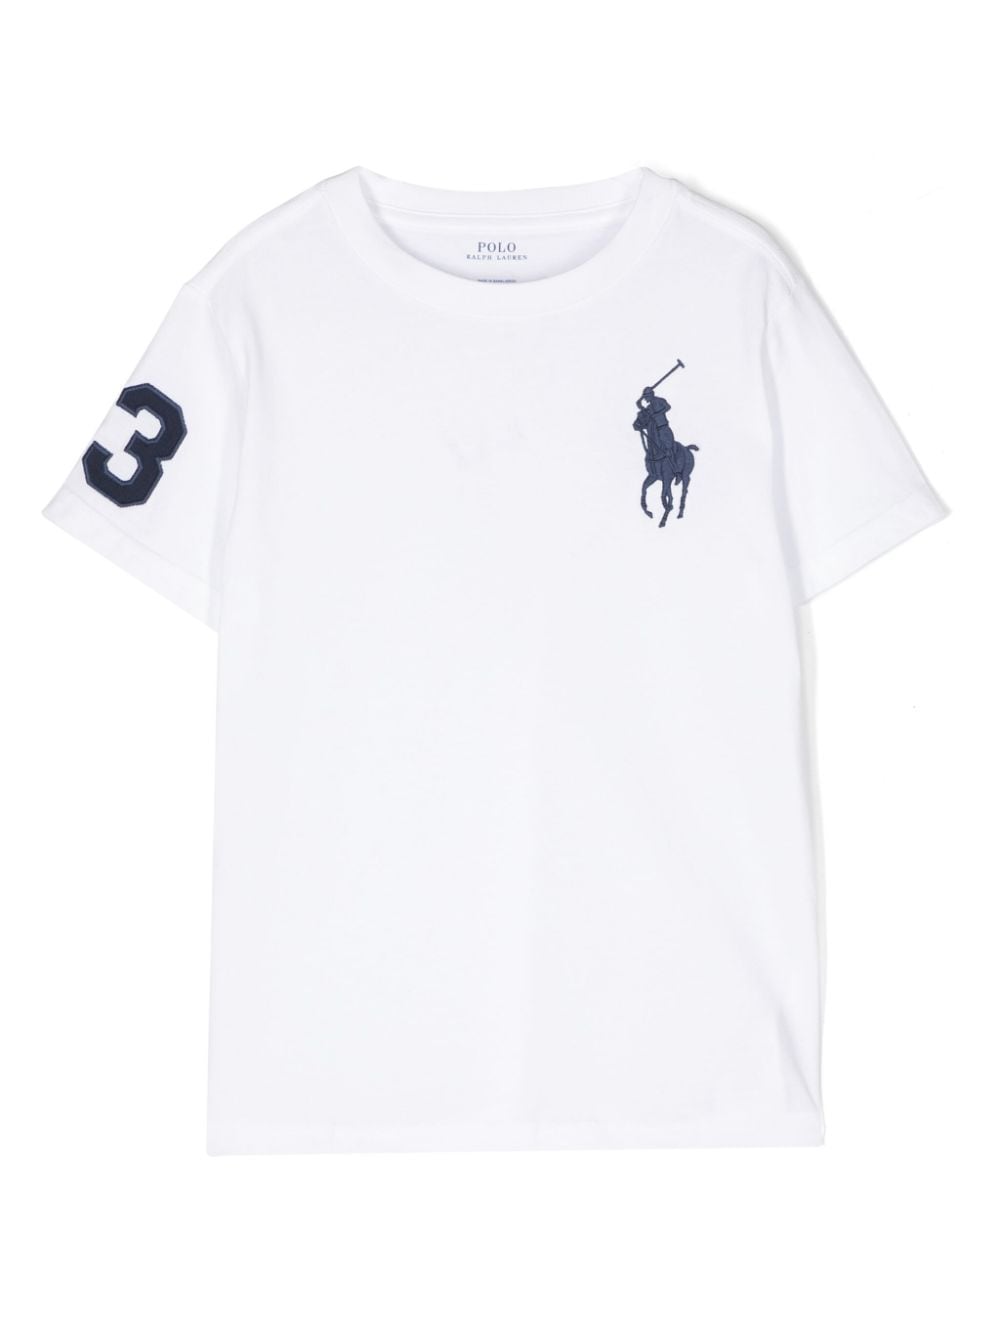 Ralph Lauren Kids Polo Pony cotton T-shirt - Bianco